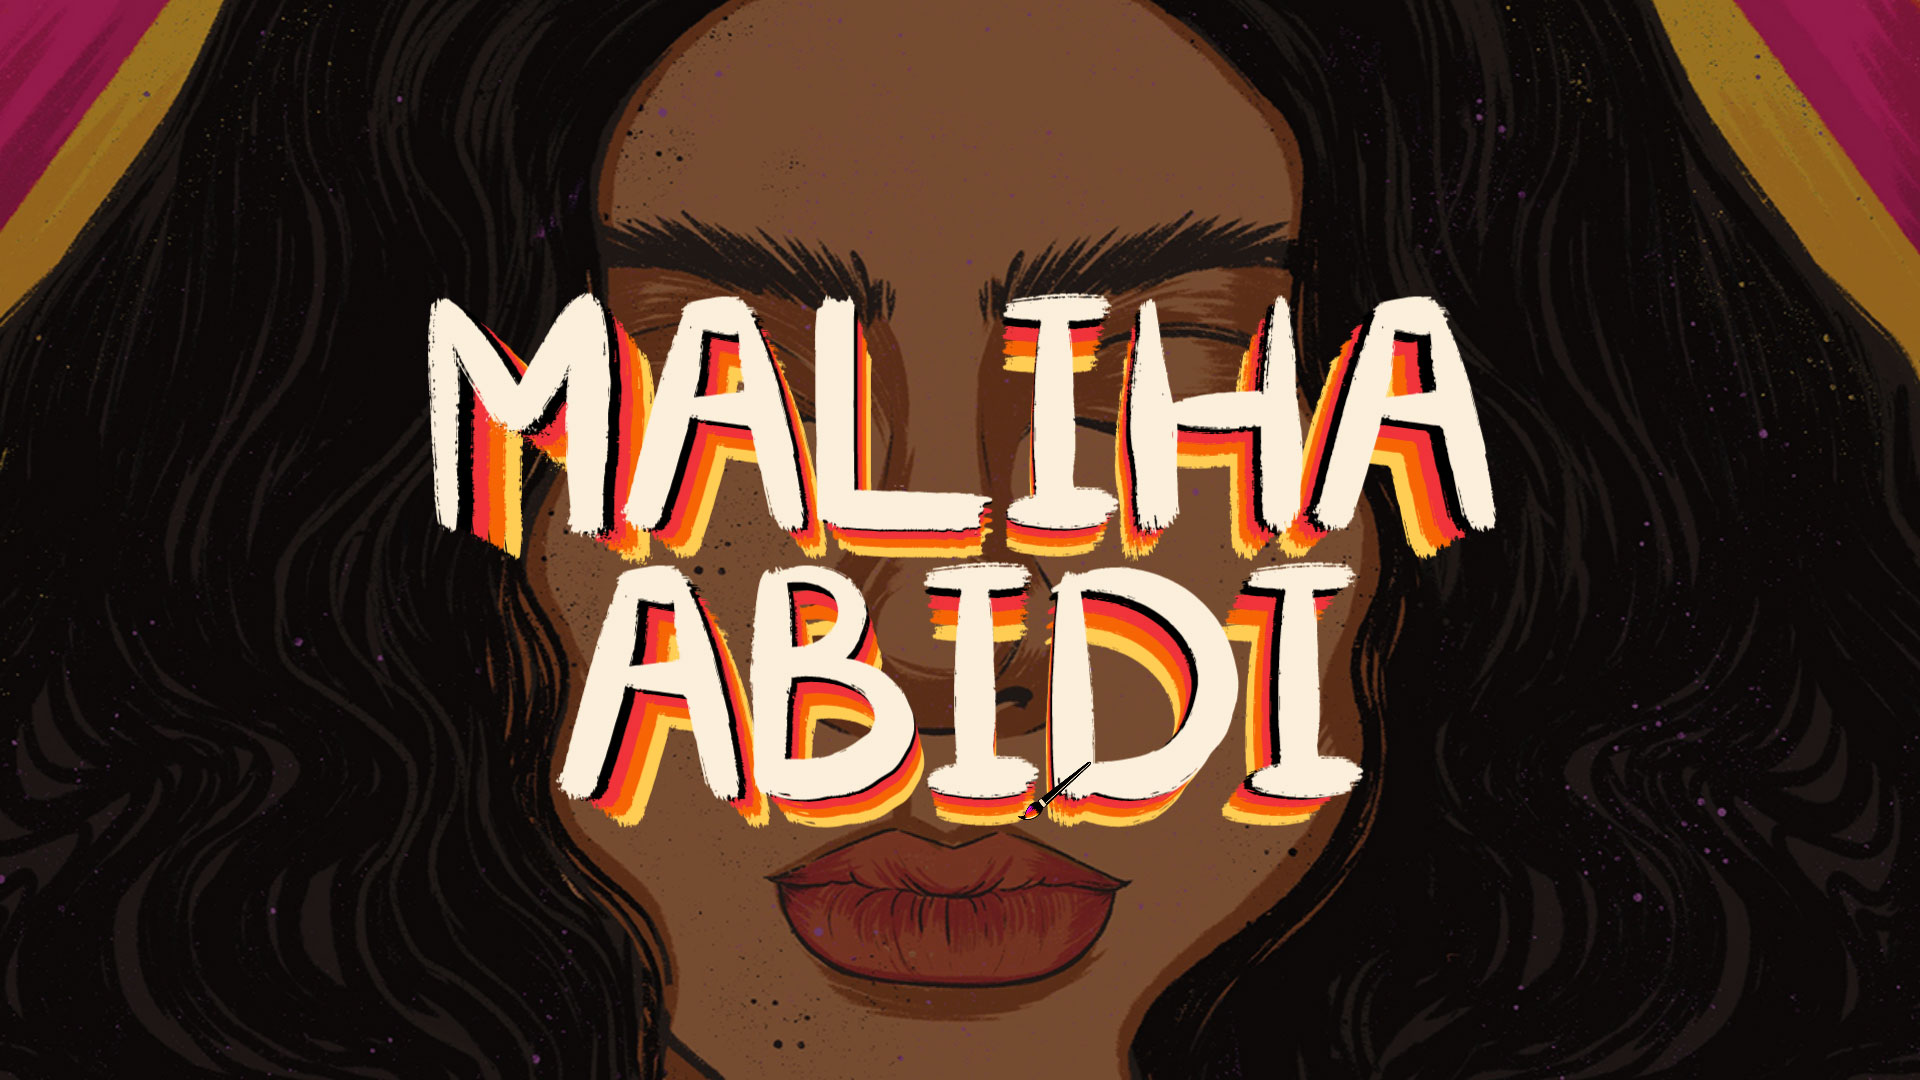 Maliha Abidi